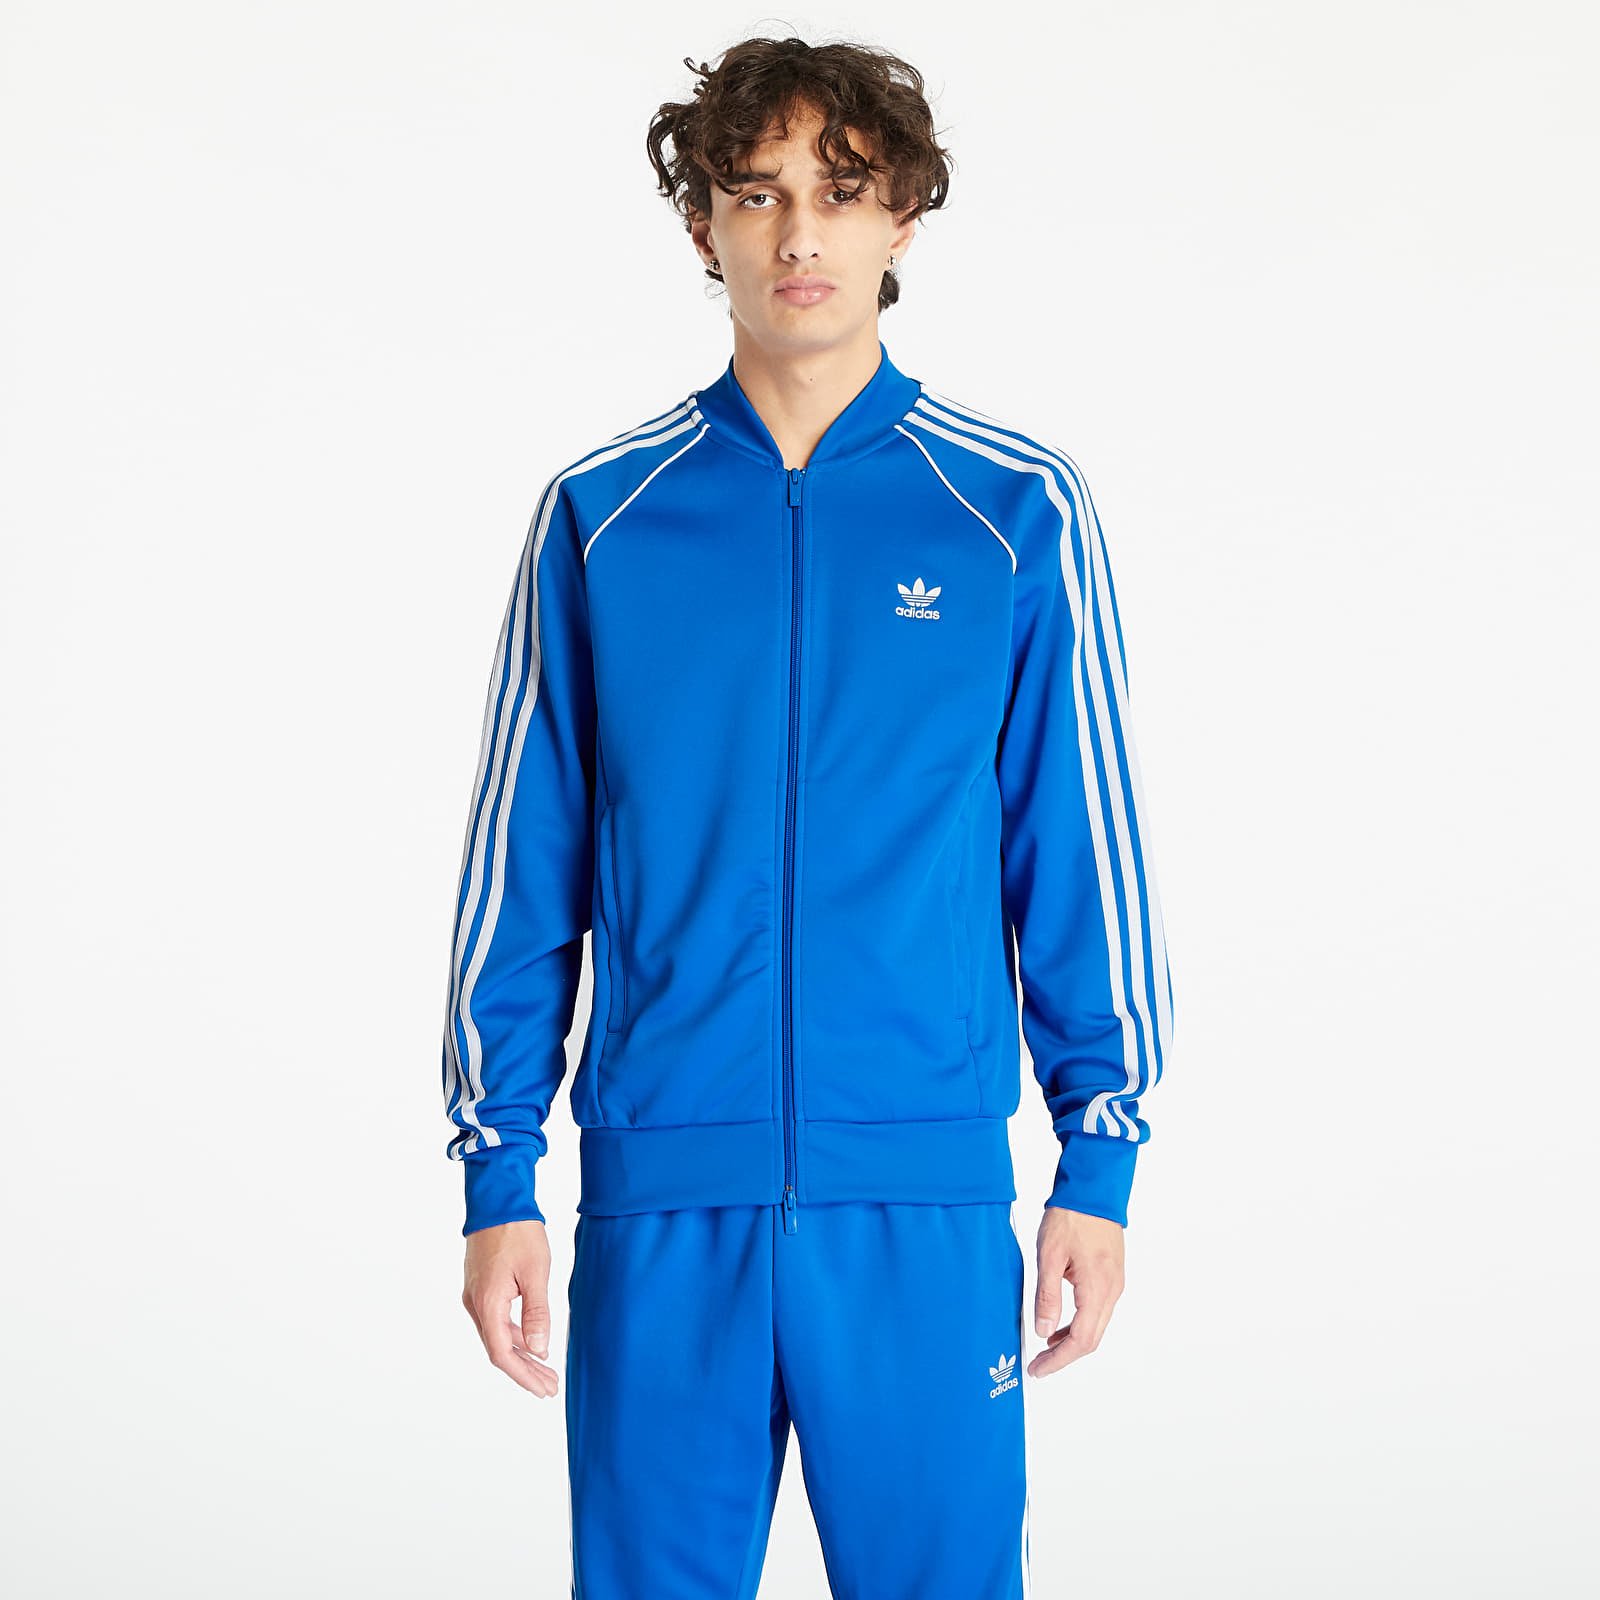 White | Classics Footshop Top Adicolor and Bird/ Sst Hoodies sweatshirts Blue adidas Track